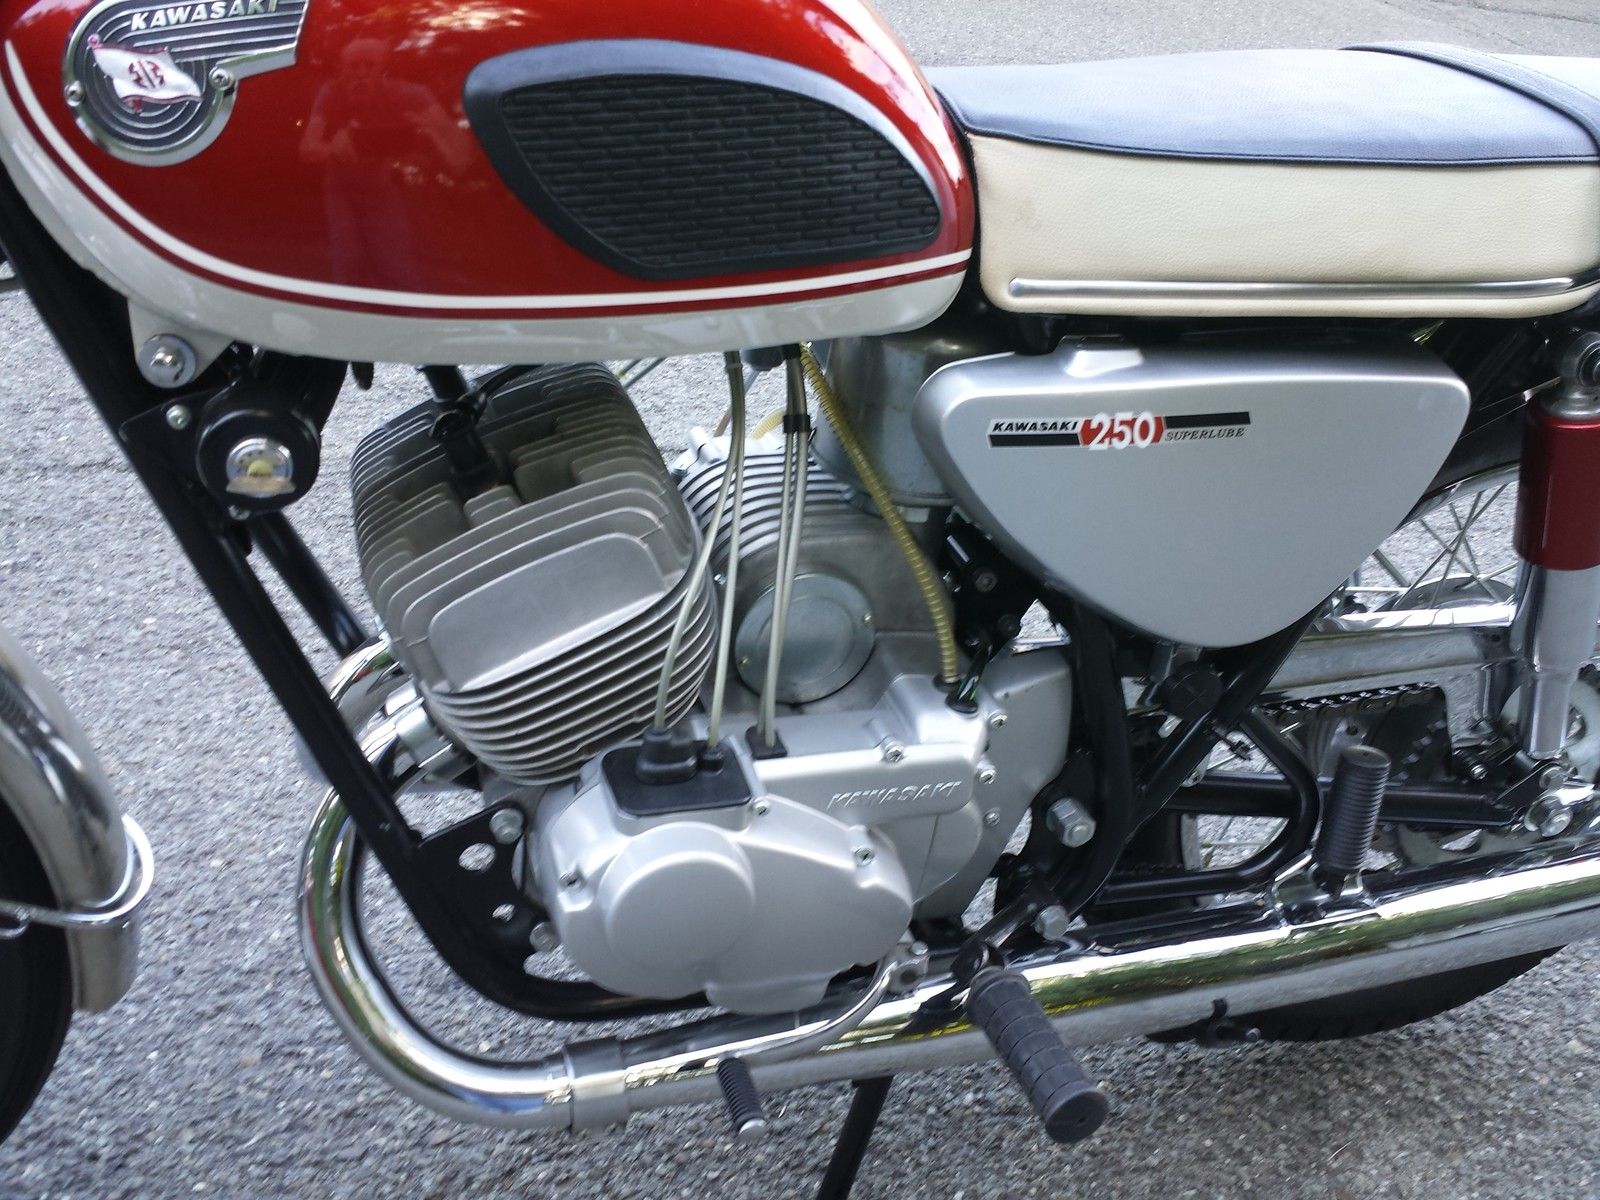 Tæl op se tv Algebra Restored Kawasaki A1 Samurai - 1968 Photographs at Classic Bikes Restored  |Bikes Restored